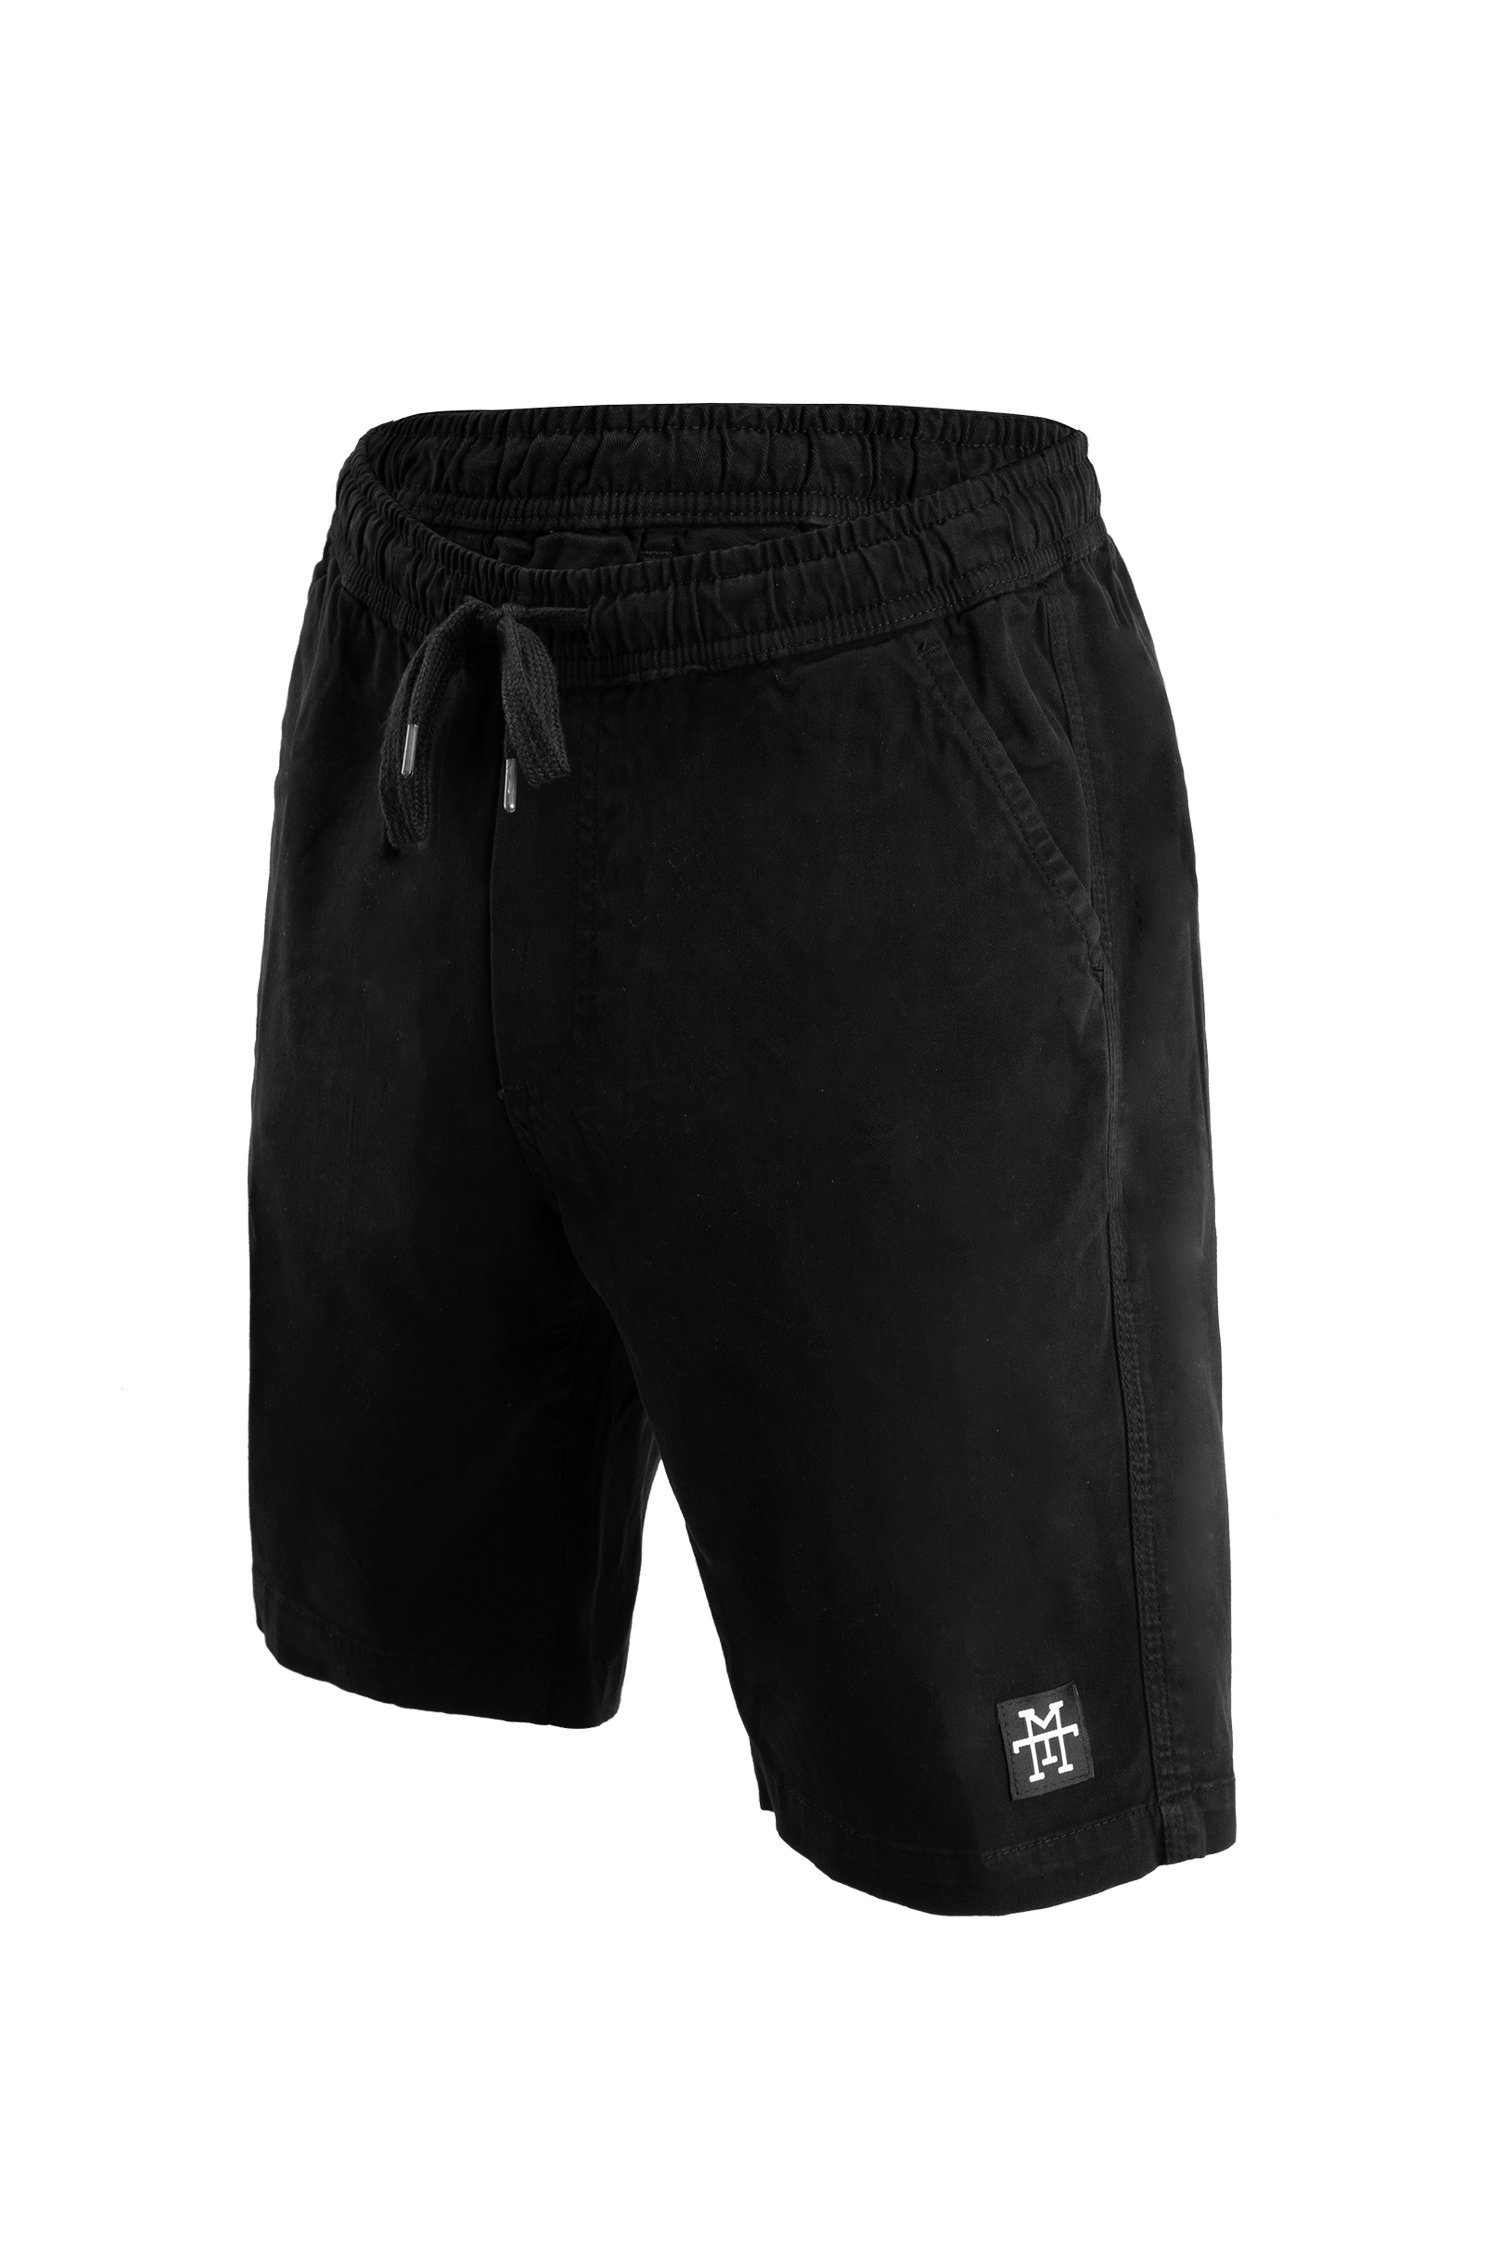 Manufaktur13 Chinoshorts Chino mit Kurze dehnbarem Black Twill Stretch Shorts Tunnelzug Hose aus / - Kordelzug